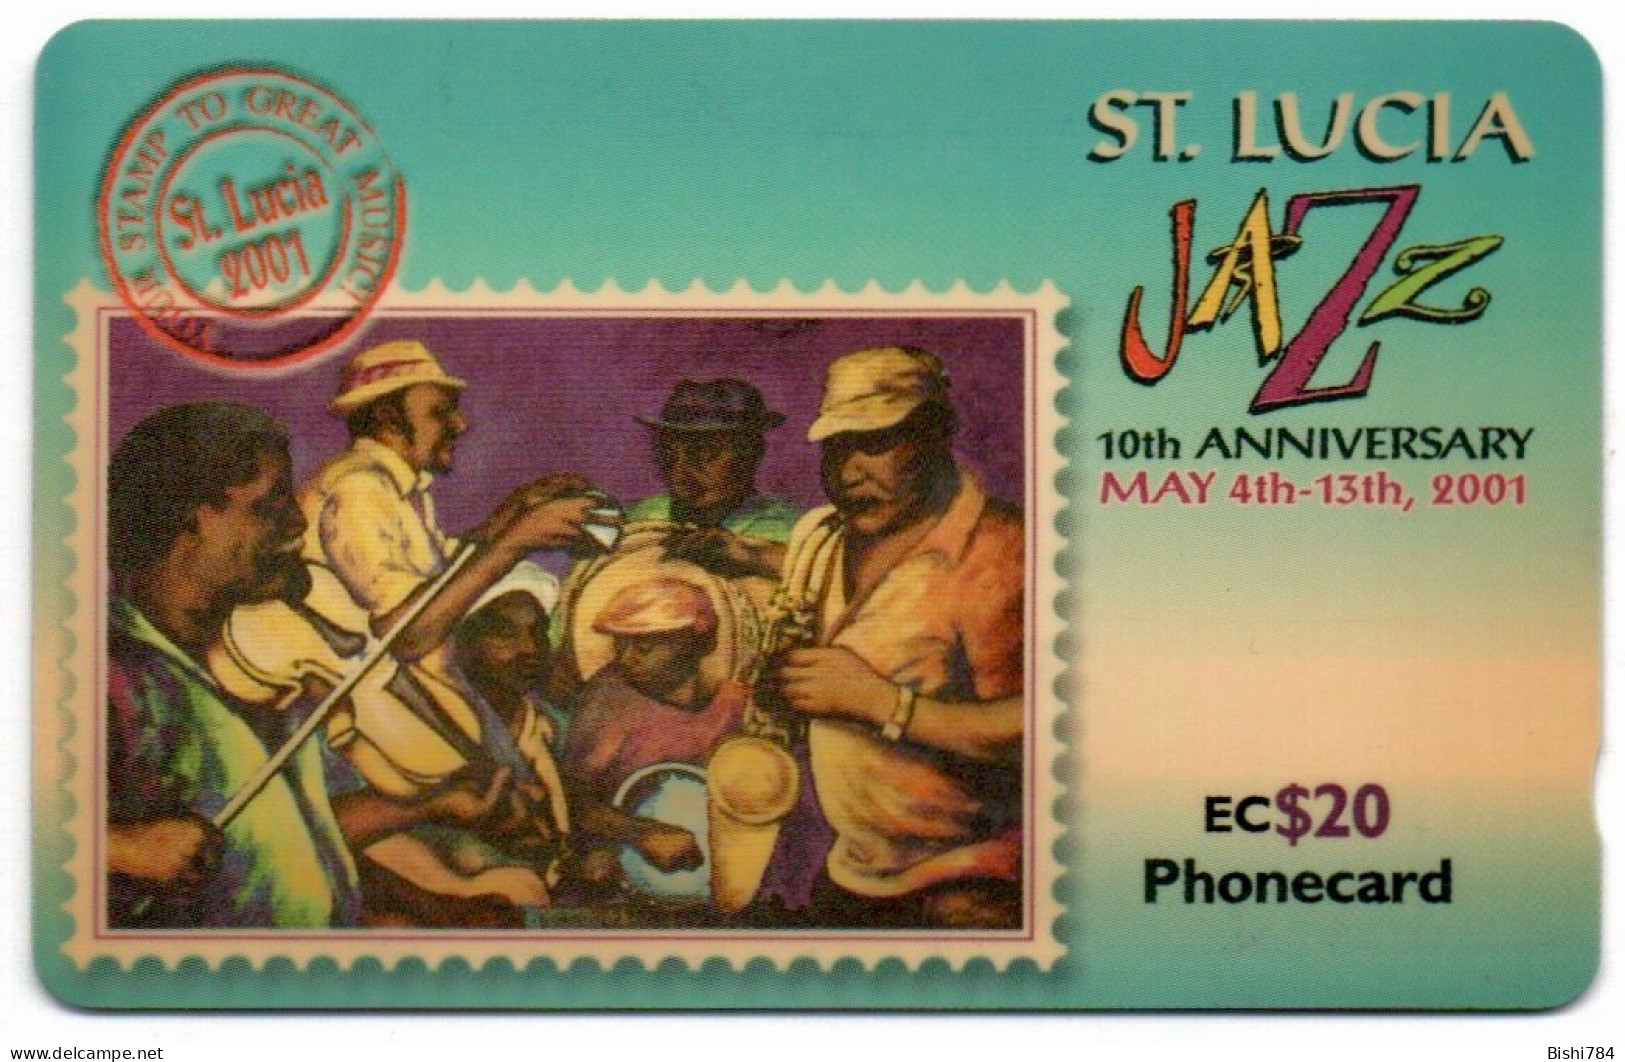 St. Lucia - Jazz Festival 2001 - 337CSLJ - Saint Lucia